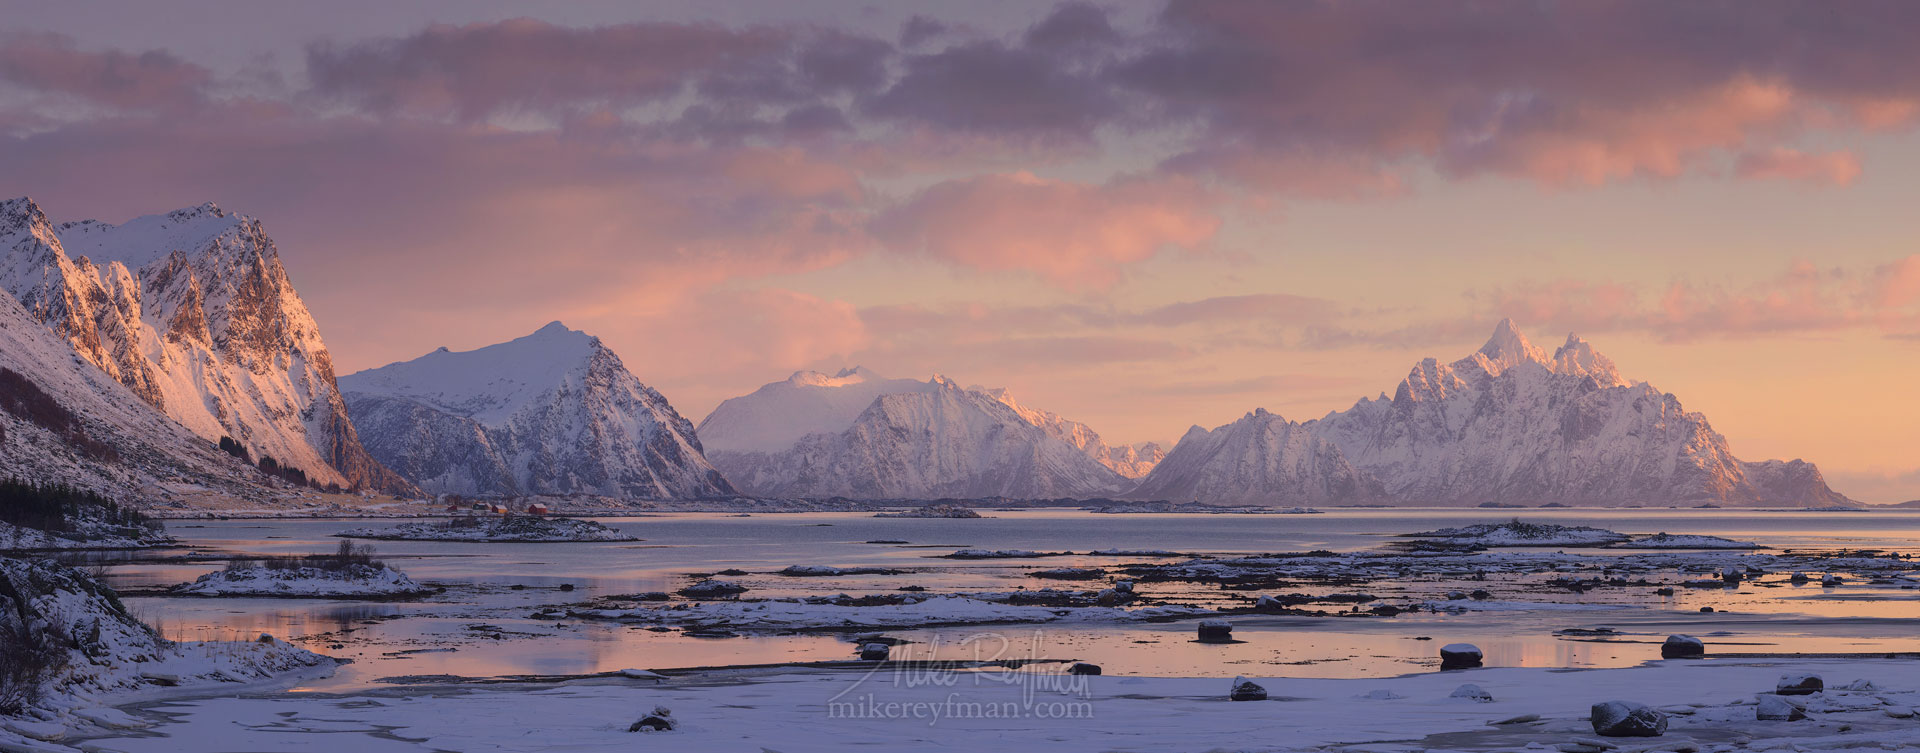 Skifjorden sunrise. Skifjorden, Vestvagoy, Lofoten archipelago, Nordland, Norway. LF-MRD1E0311-17_Pano-2.55x1 - Lofoten Archipelago in Winter, Arctic Norway - Mike Reyfman Photography